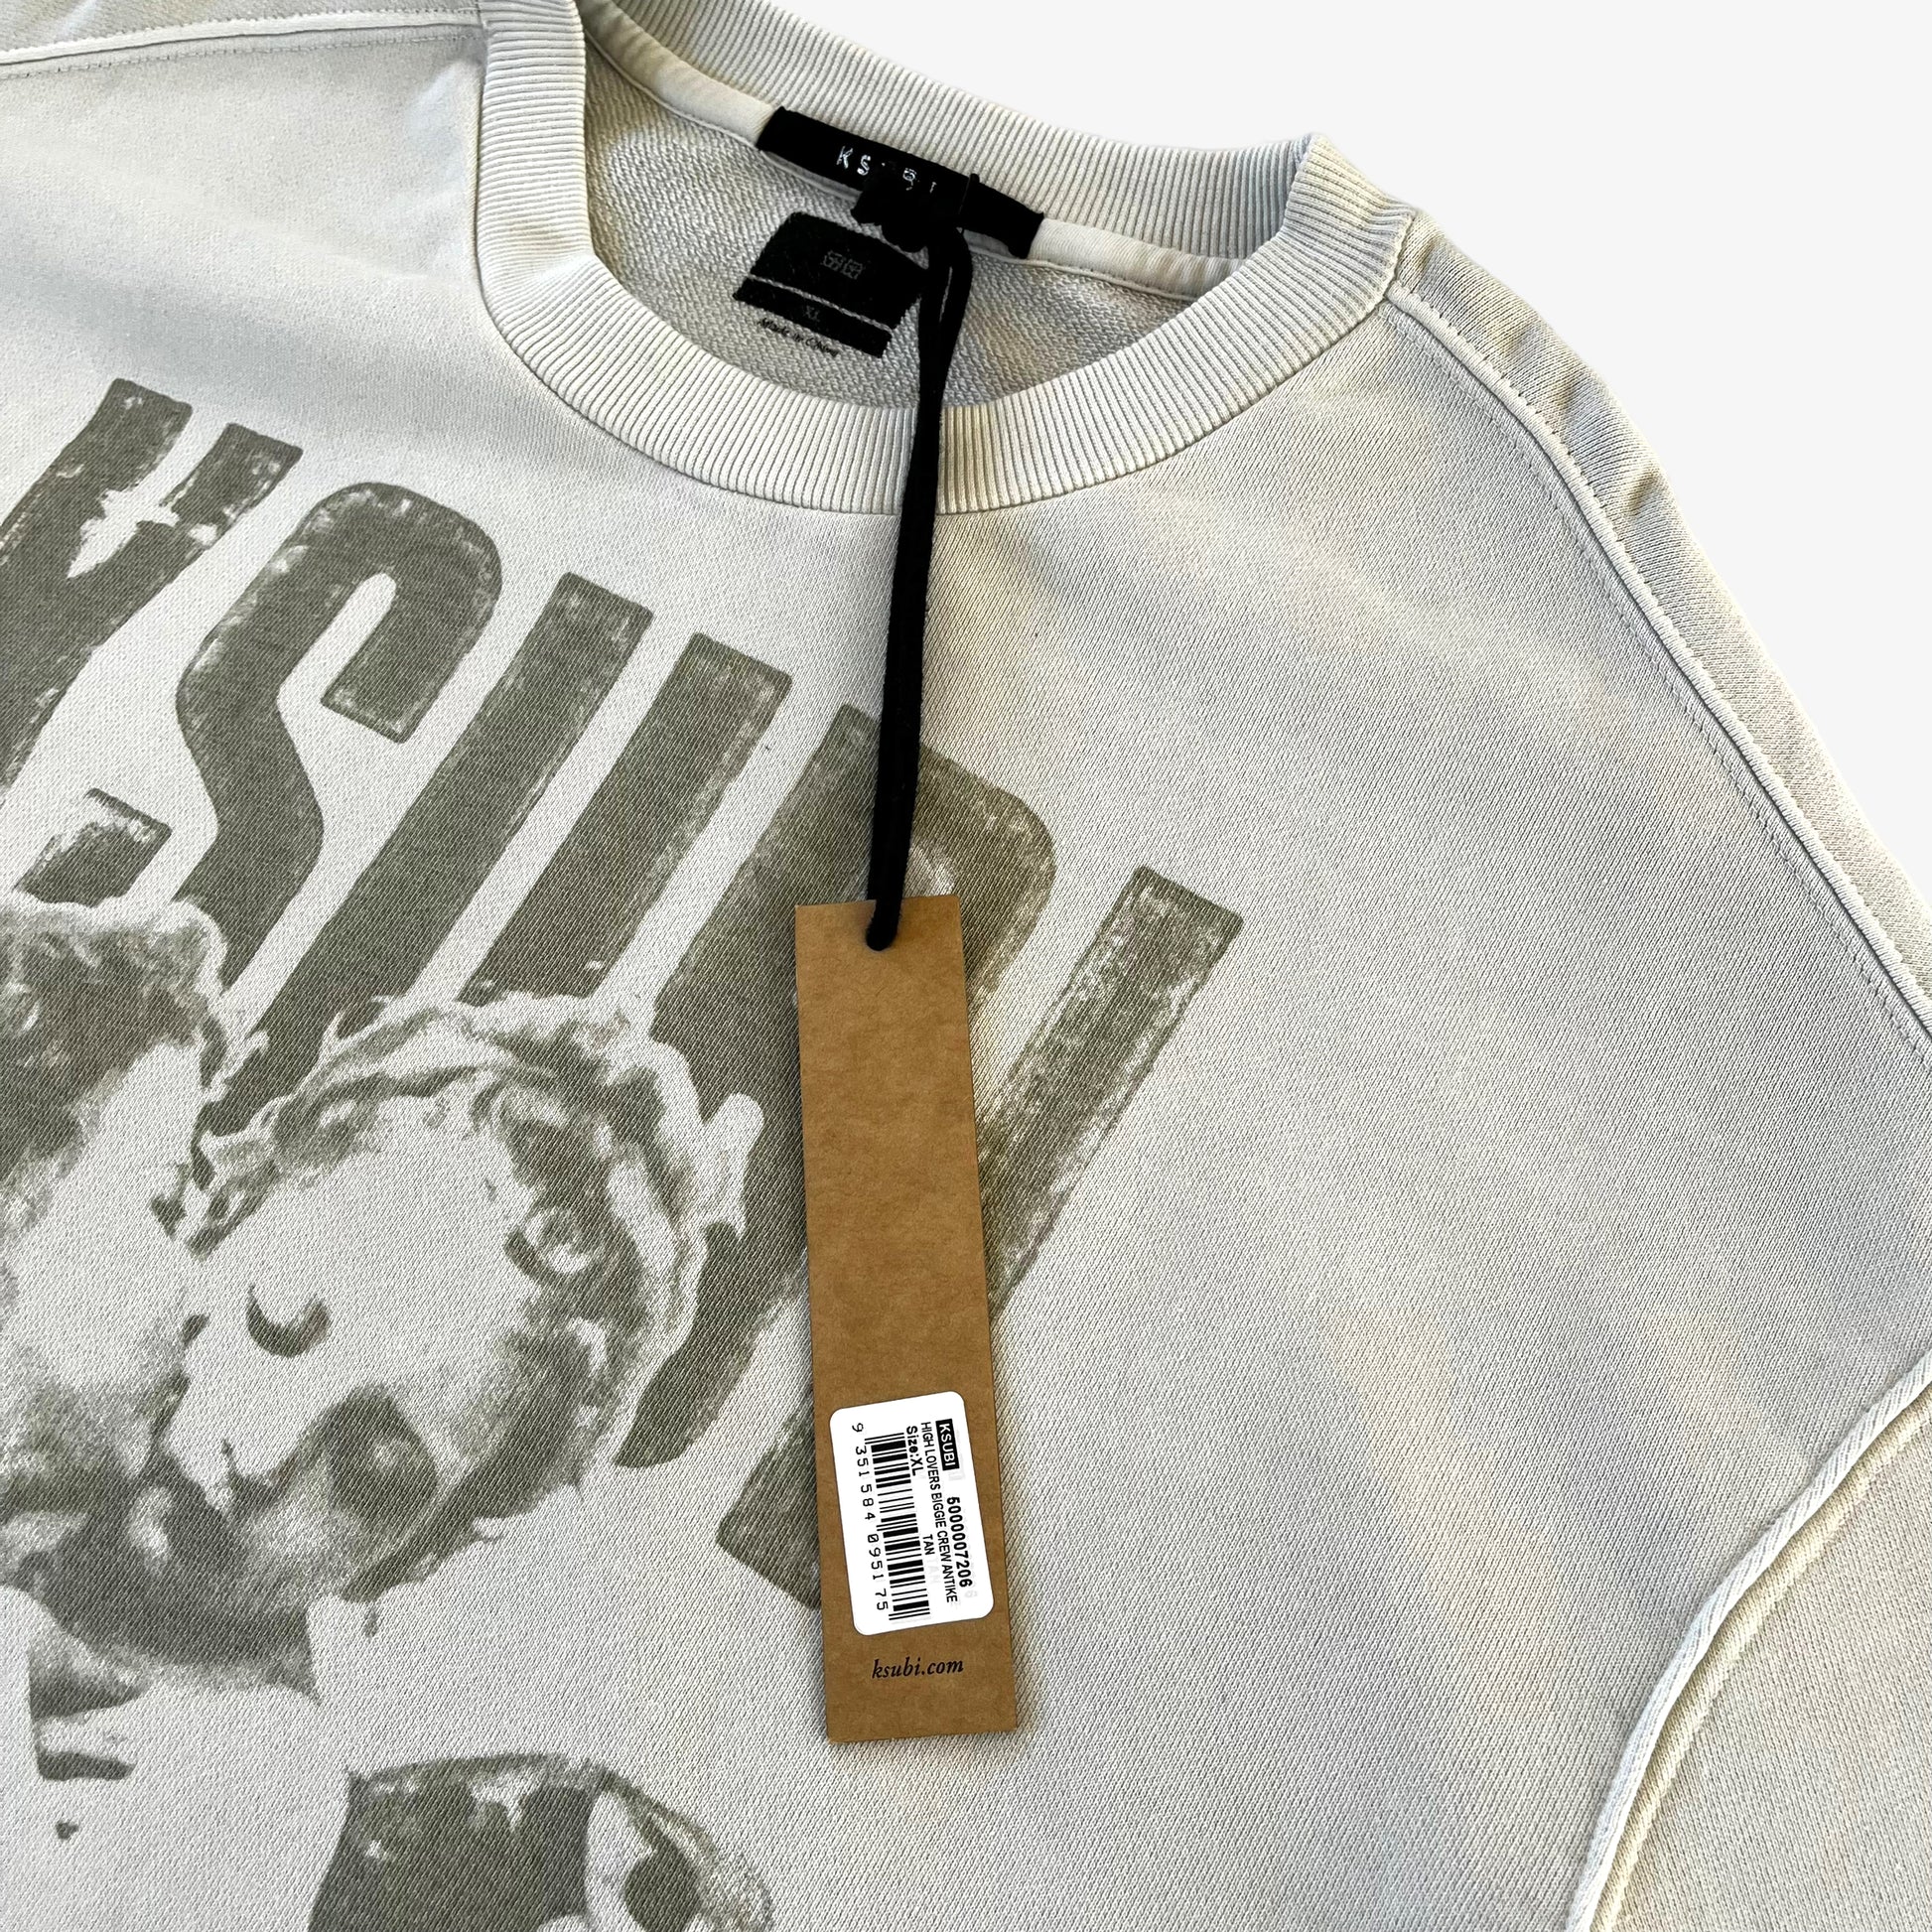 Ksubi High Lovers Crew Antike Sweatshirt Brand New With Tags Inside Label - Casspios Dream